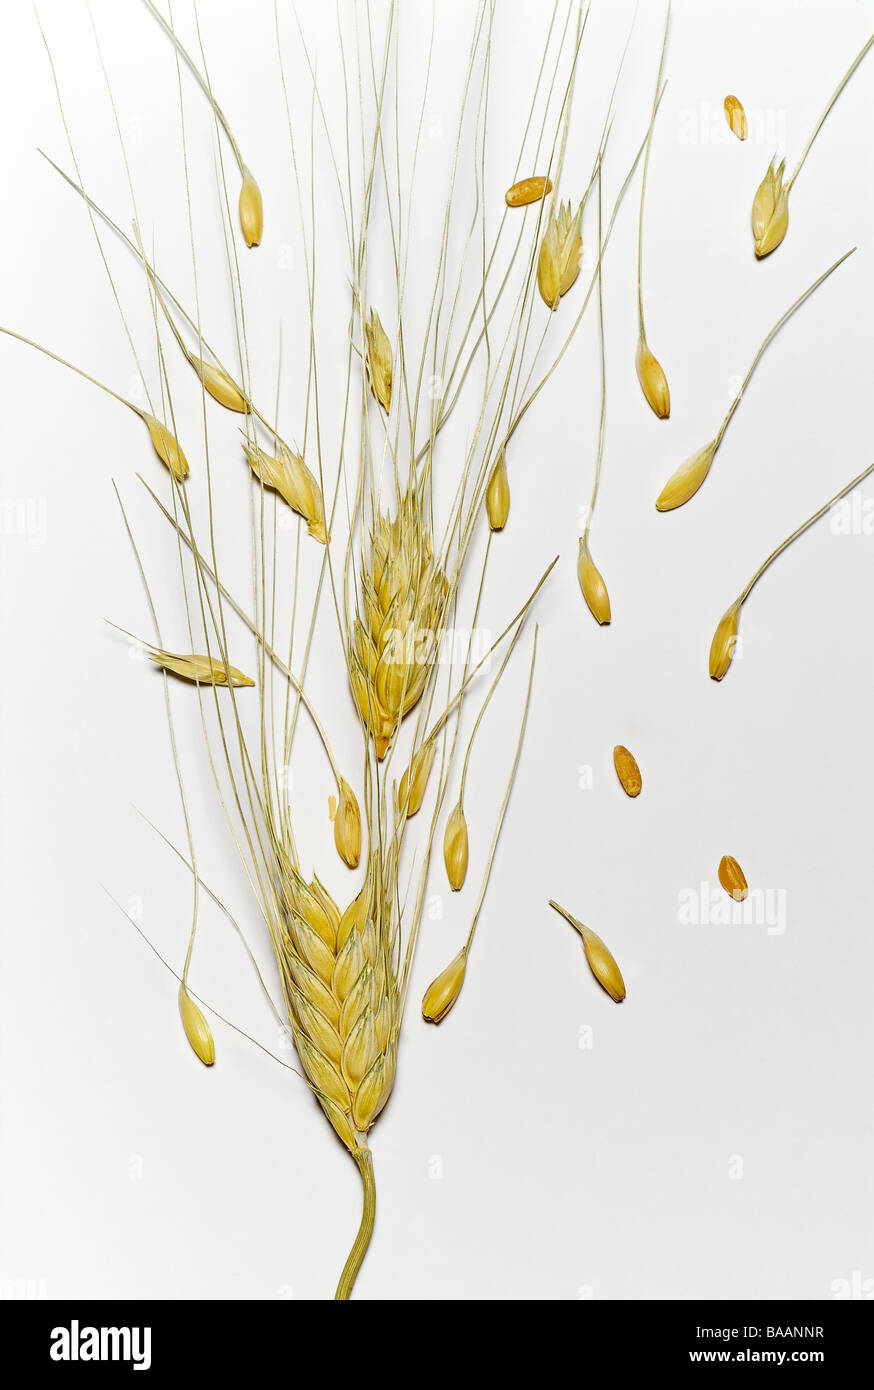 Wheat stem Stock Photo